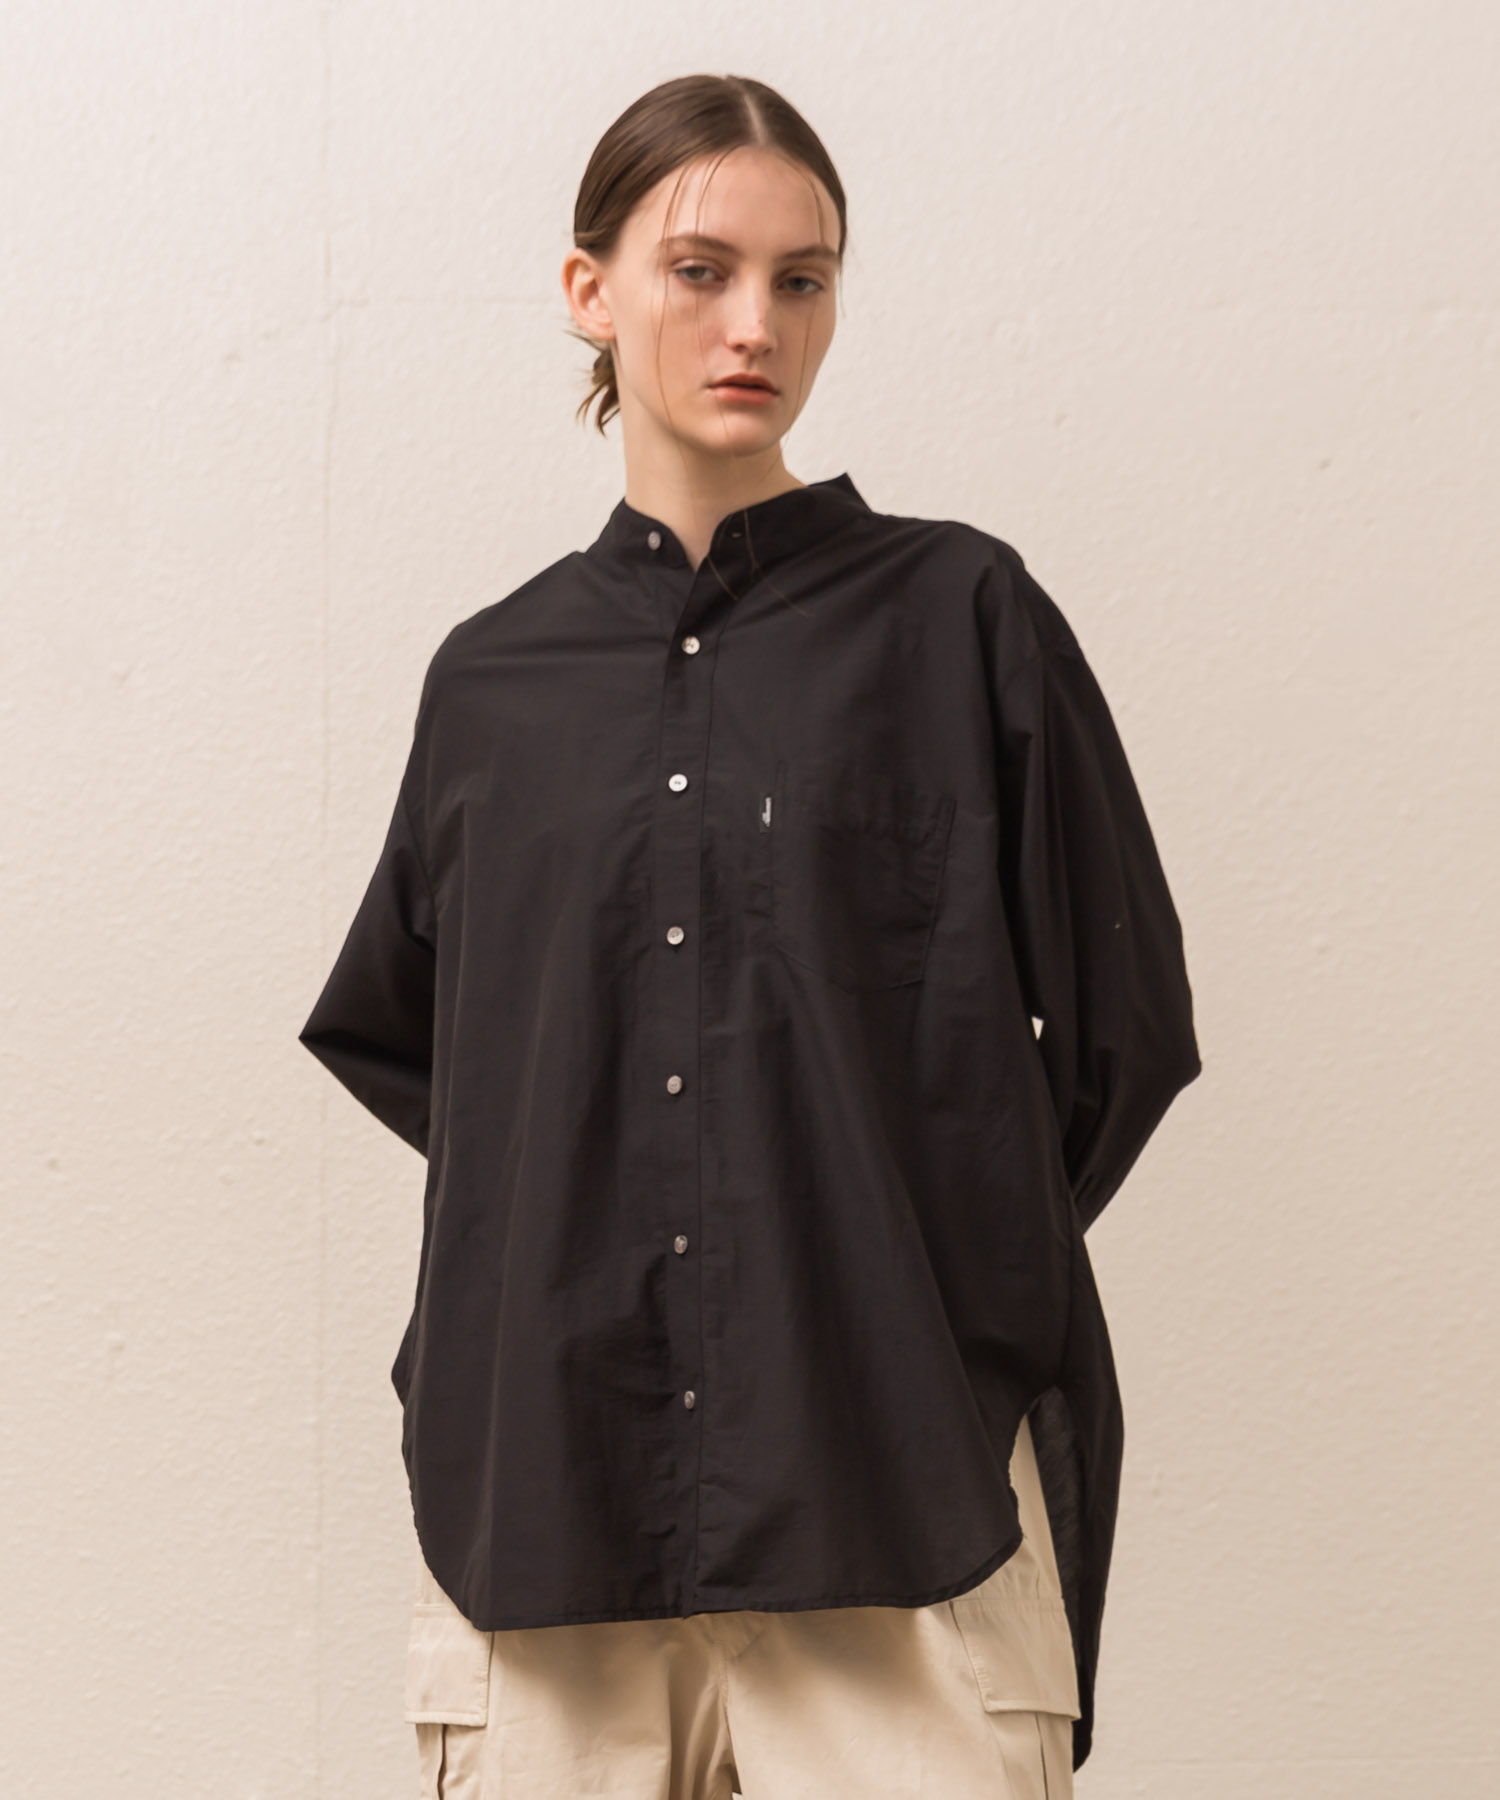 Big Silhouette Back Design Strain Shirt - BLACK